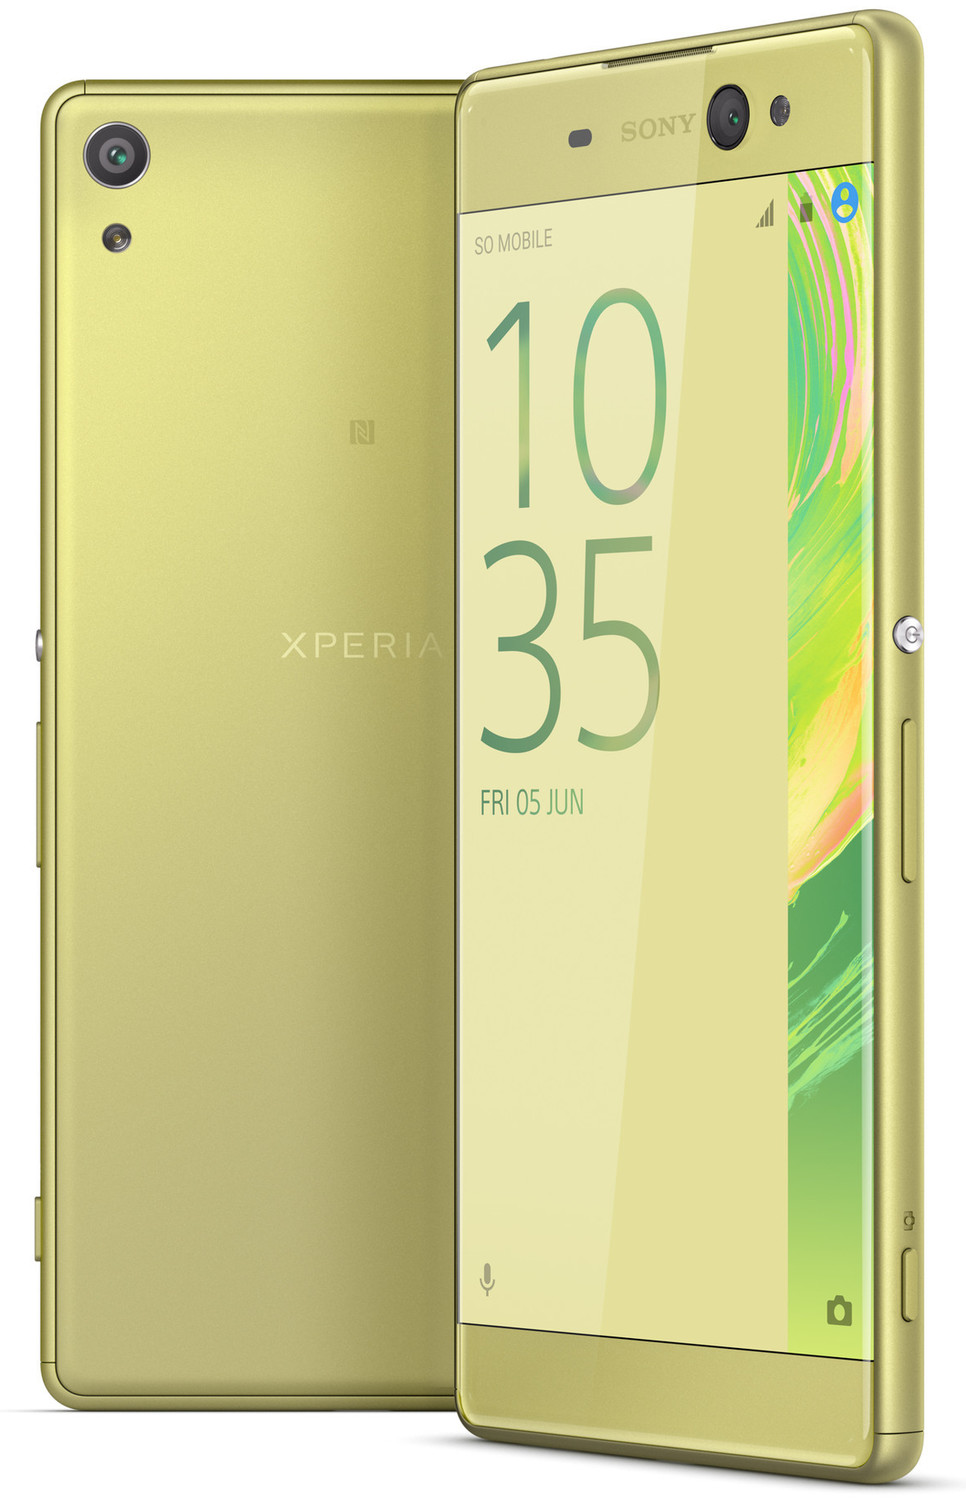 Sony Xperia XA Ultra F3211 - Specs and Price Phonegg